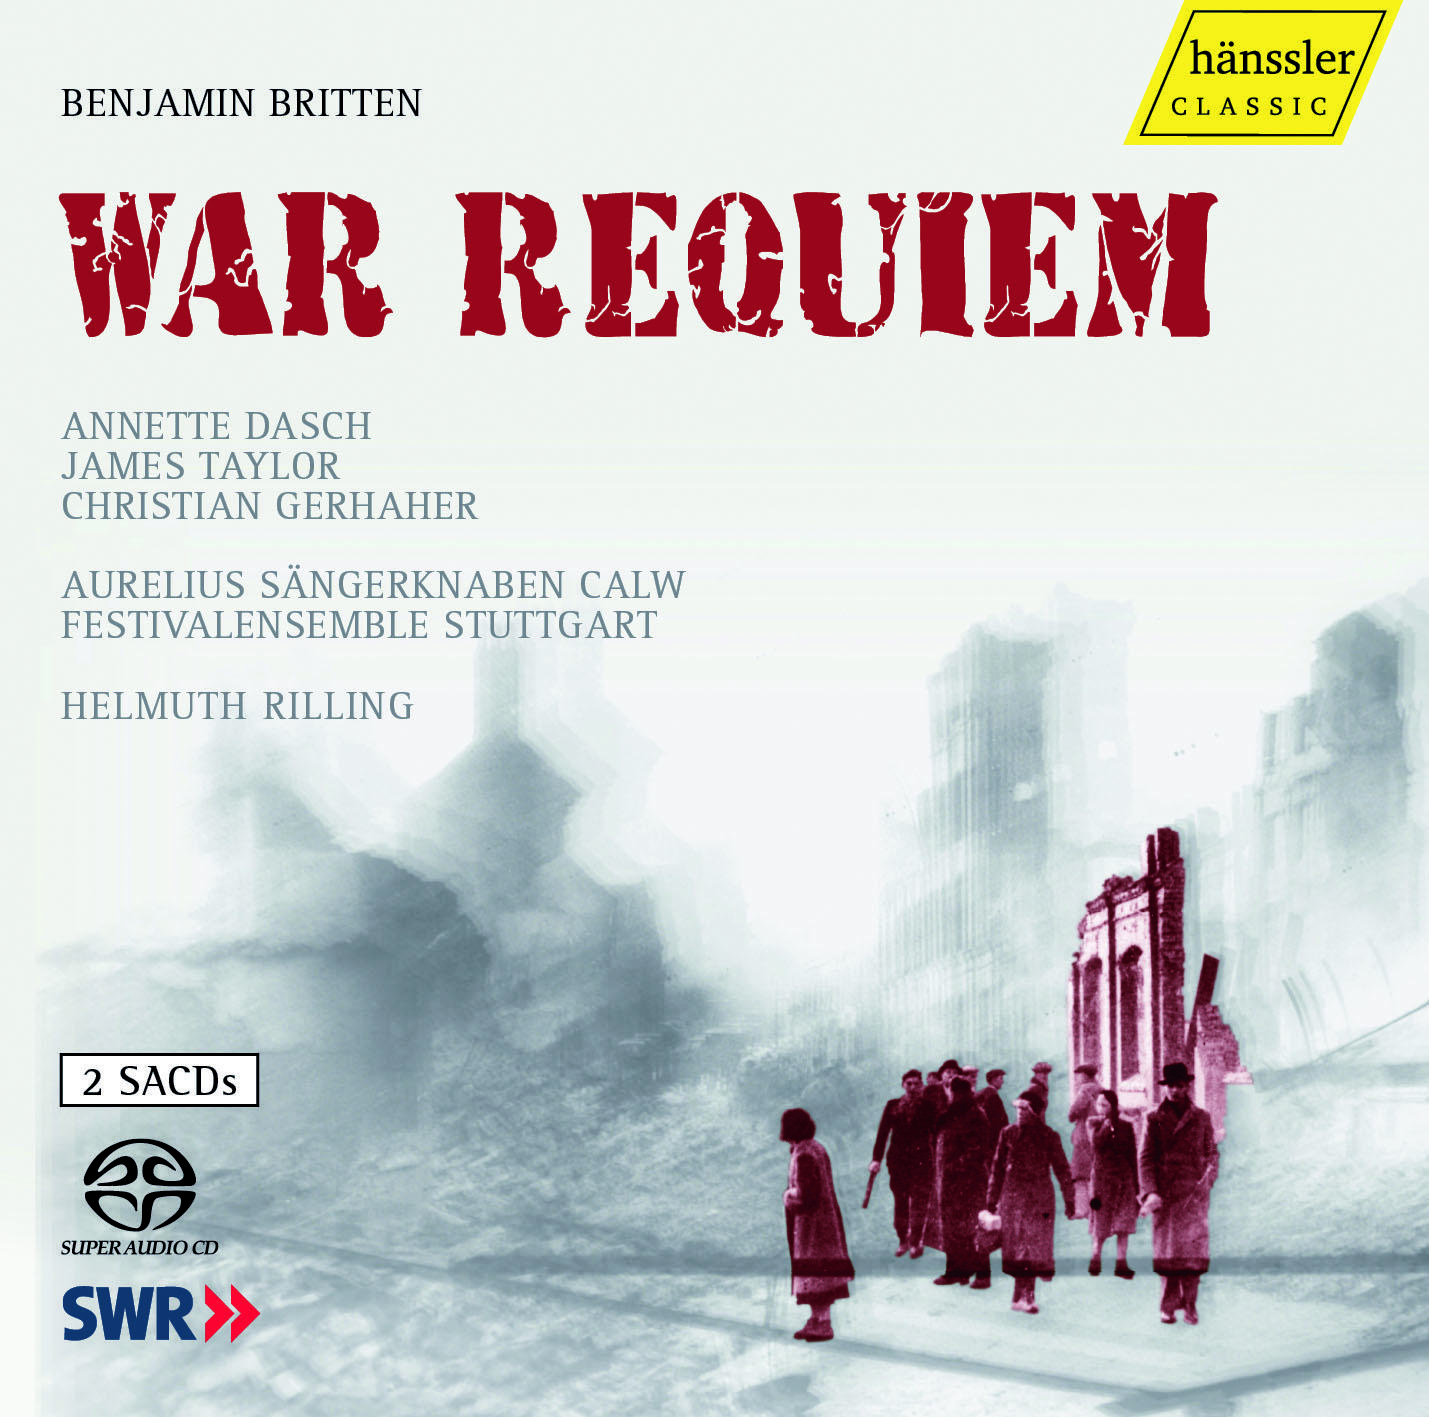 War Requiem, Op. 66: Agnus Dei